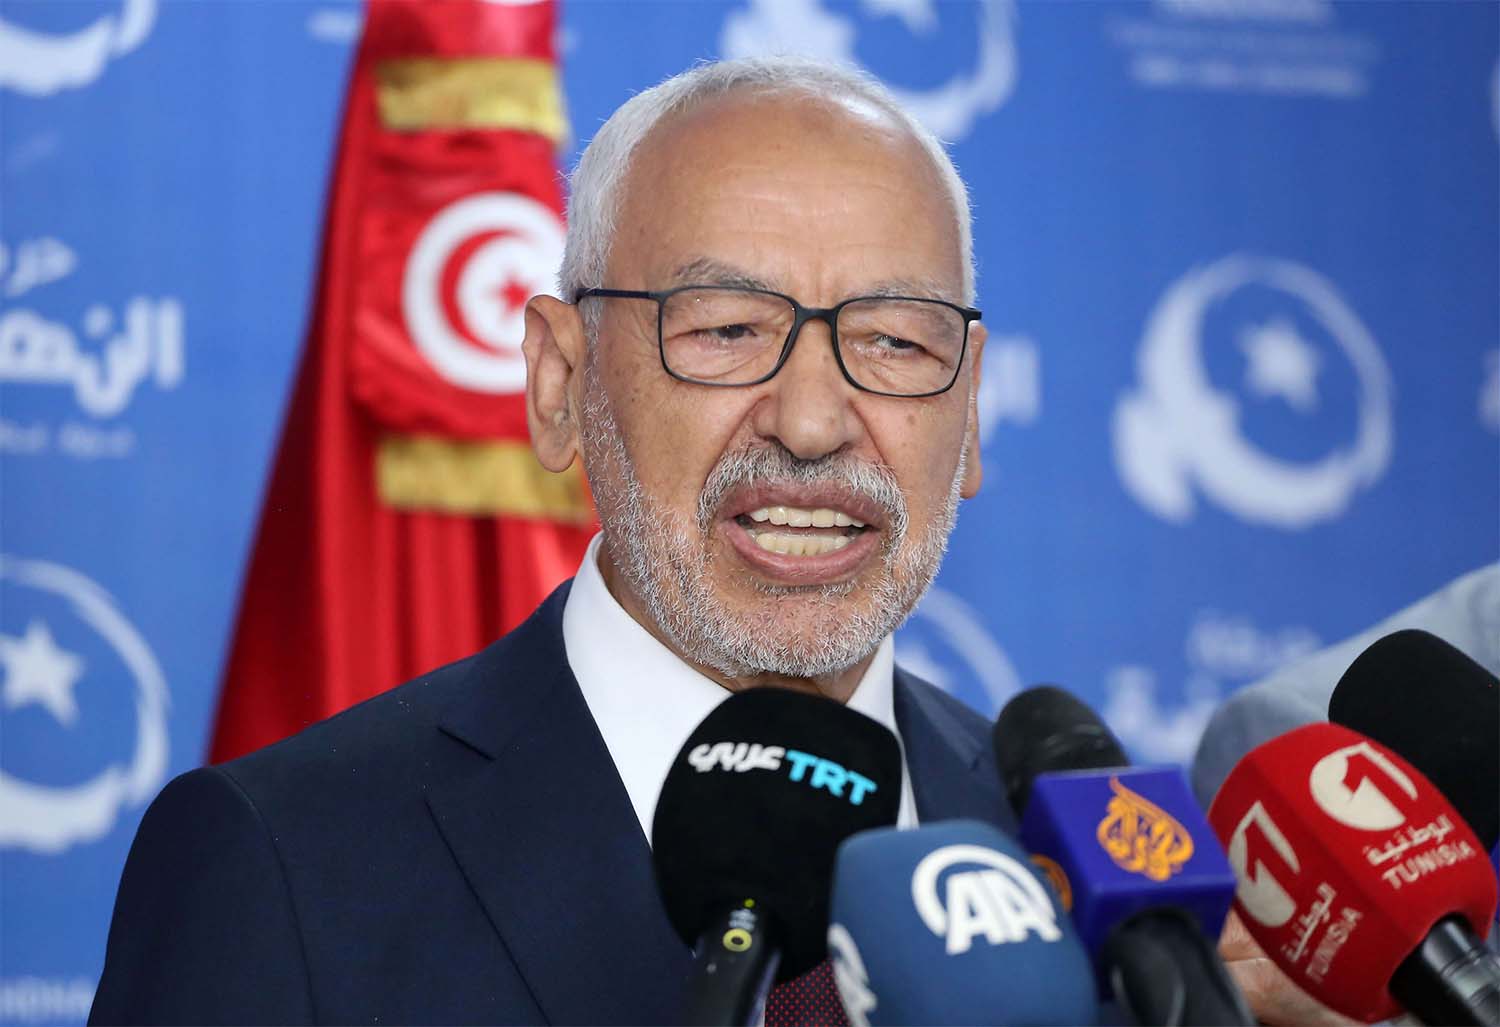 Parliament speaker Rached Ghannouchi